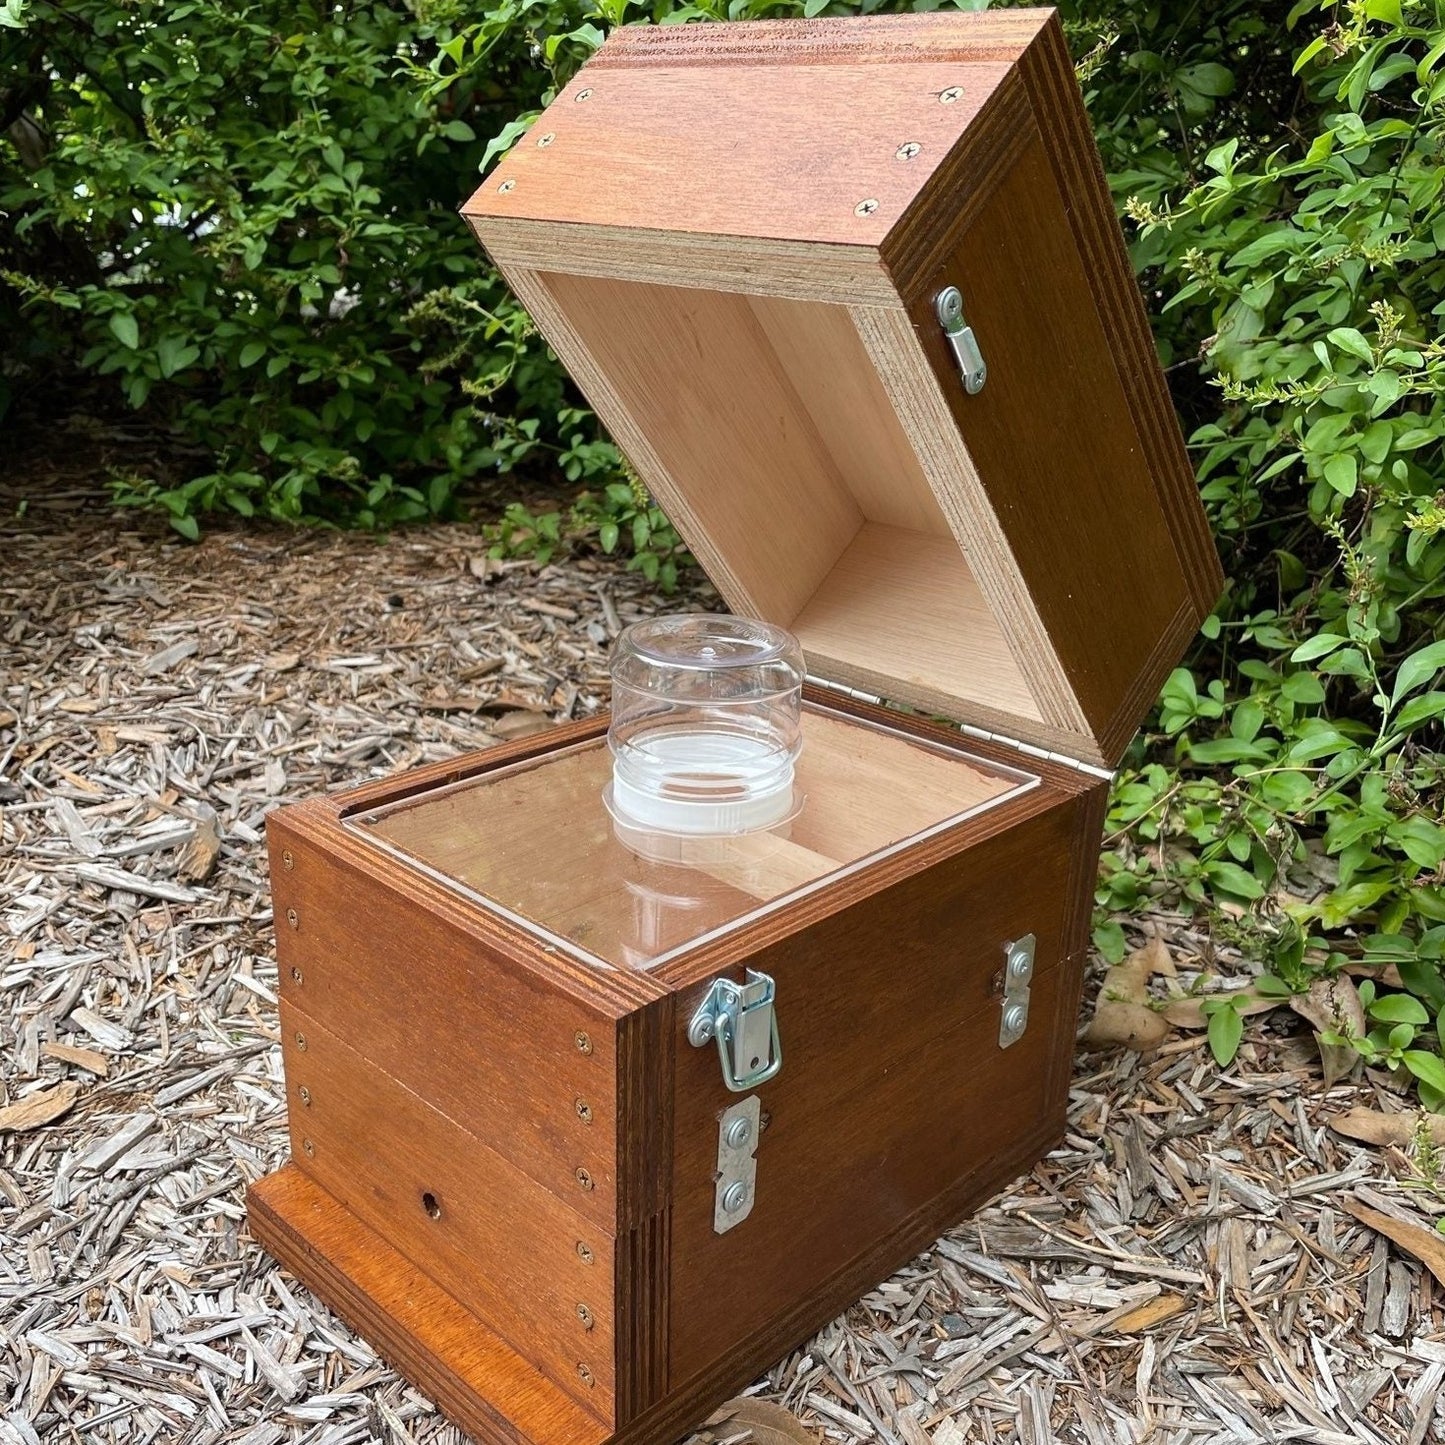 Honey Jar Hinged Lid Beehive OATH Box Stingless Australian Native Bee Hive